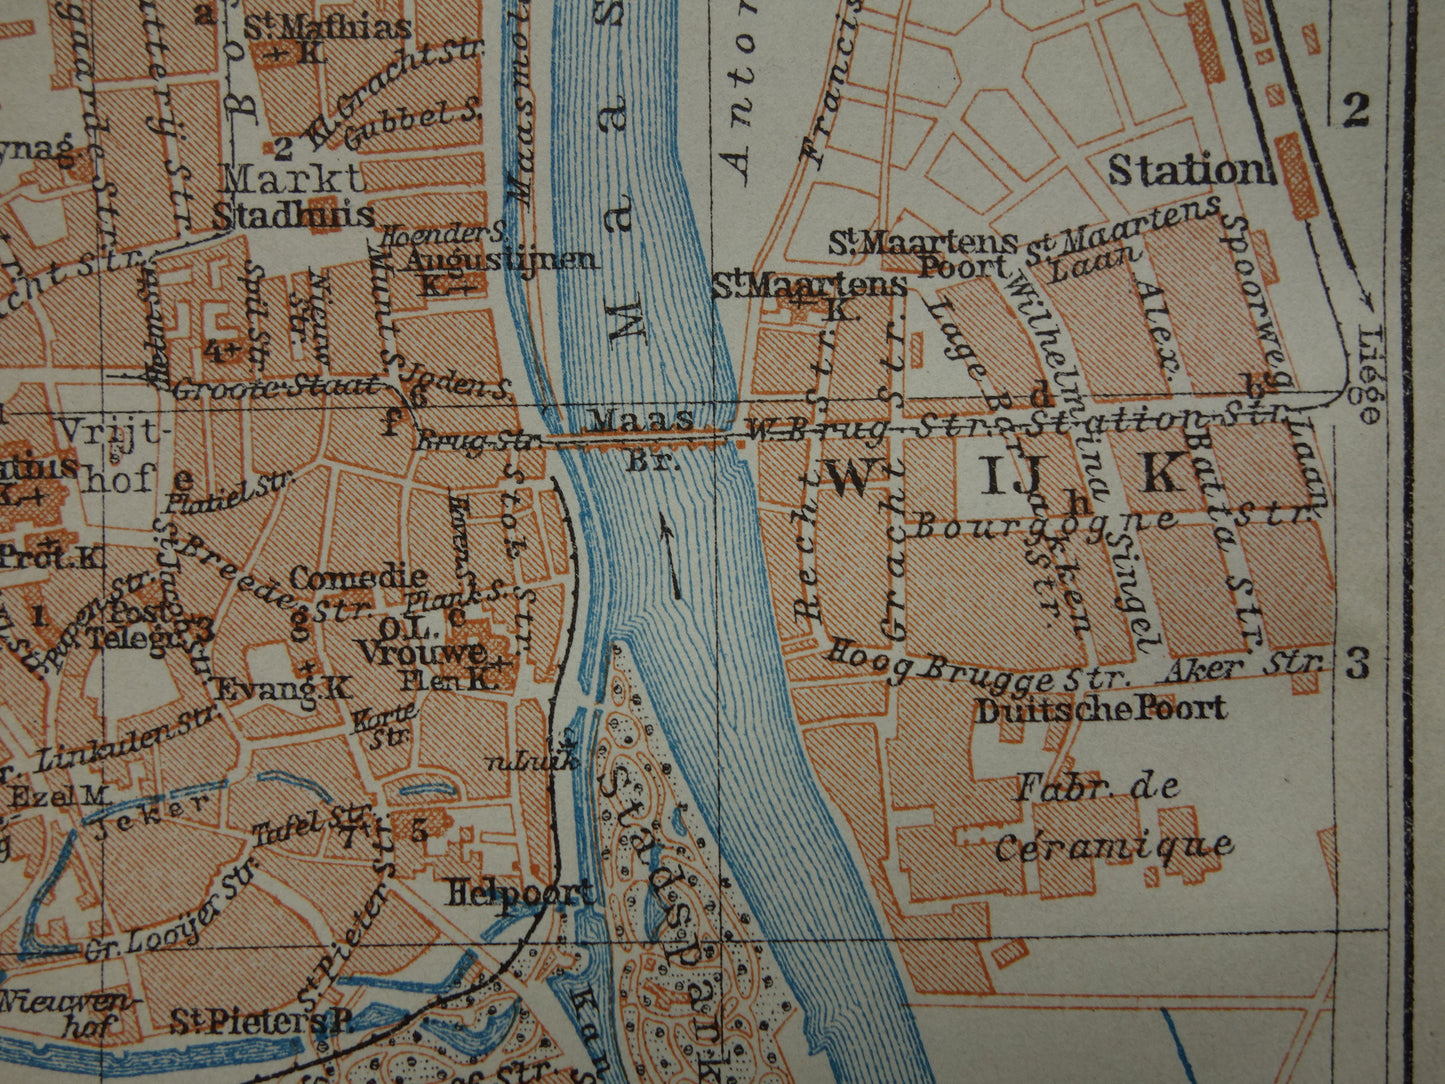 MAASTRICHT oude kaart van Maastricht en Sint-Pietersberg uit 1910 kleine originele antieke plattegrond landkaart